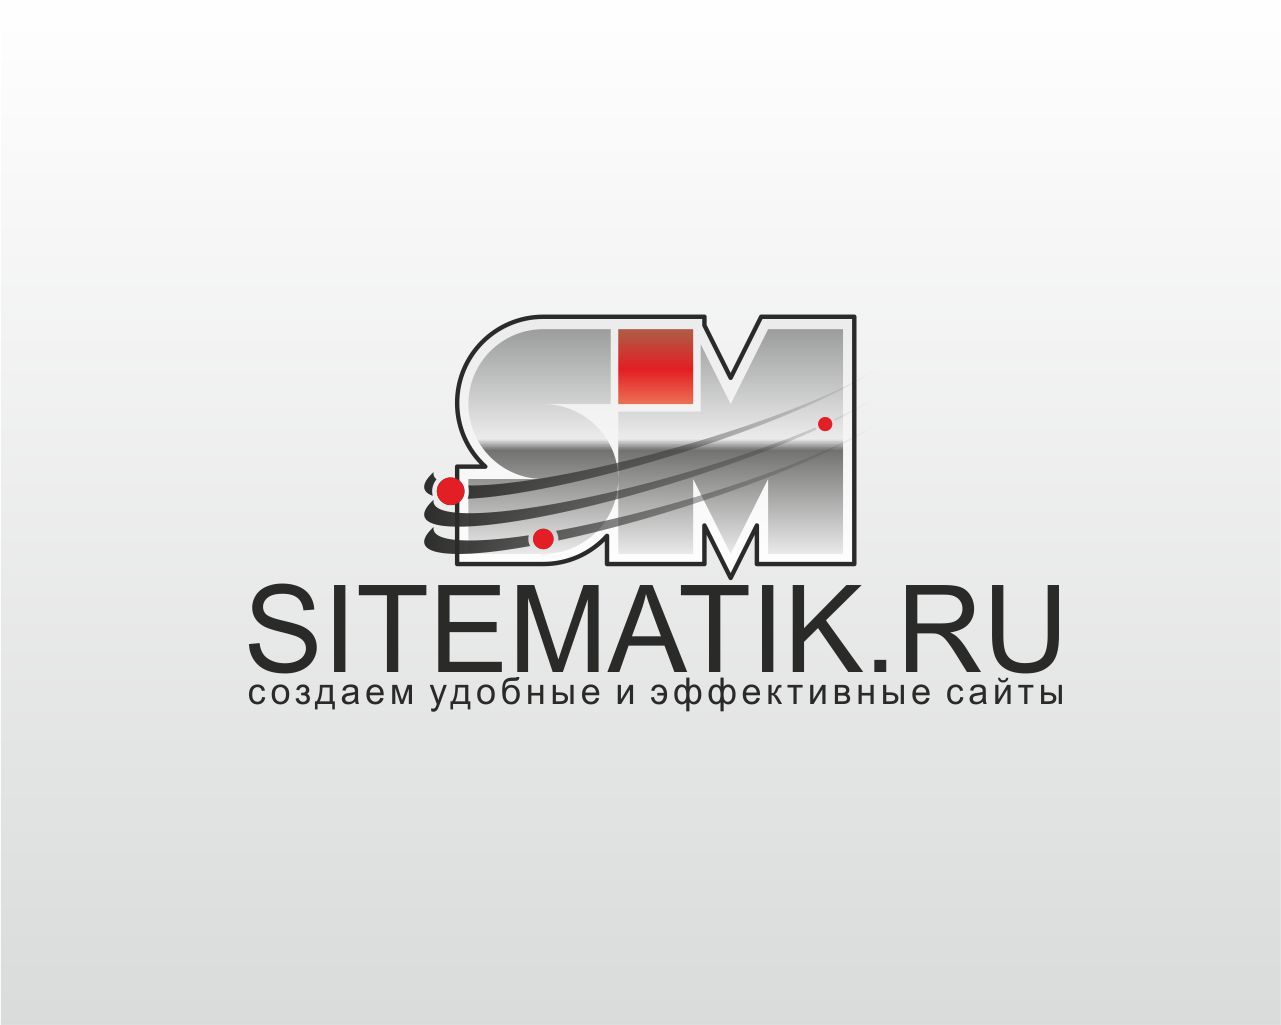 Логотип для Веб-студии - дизайнер M1chail